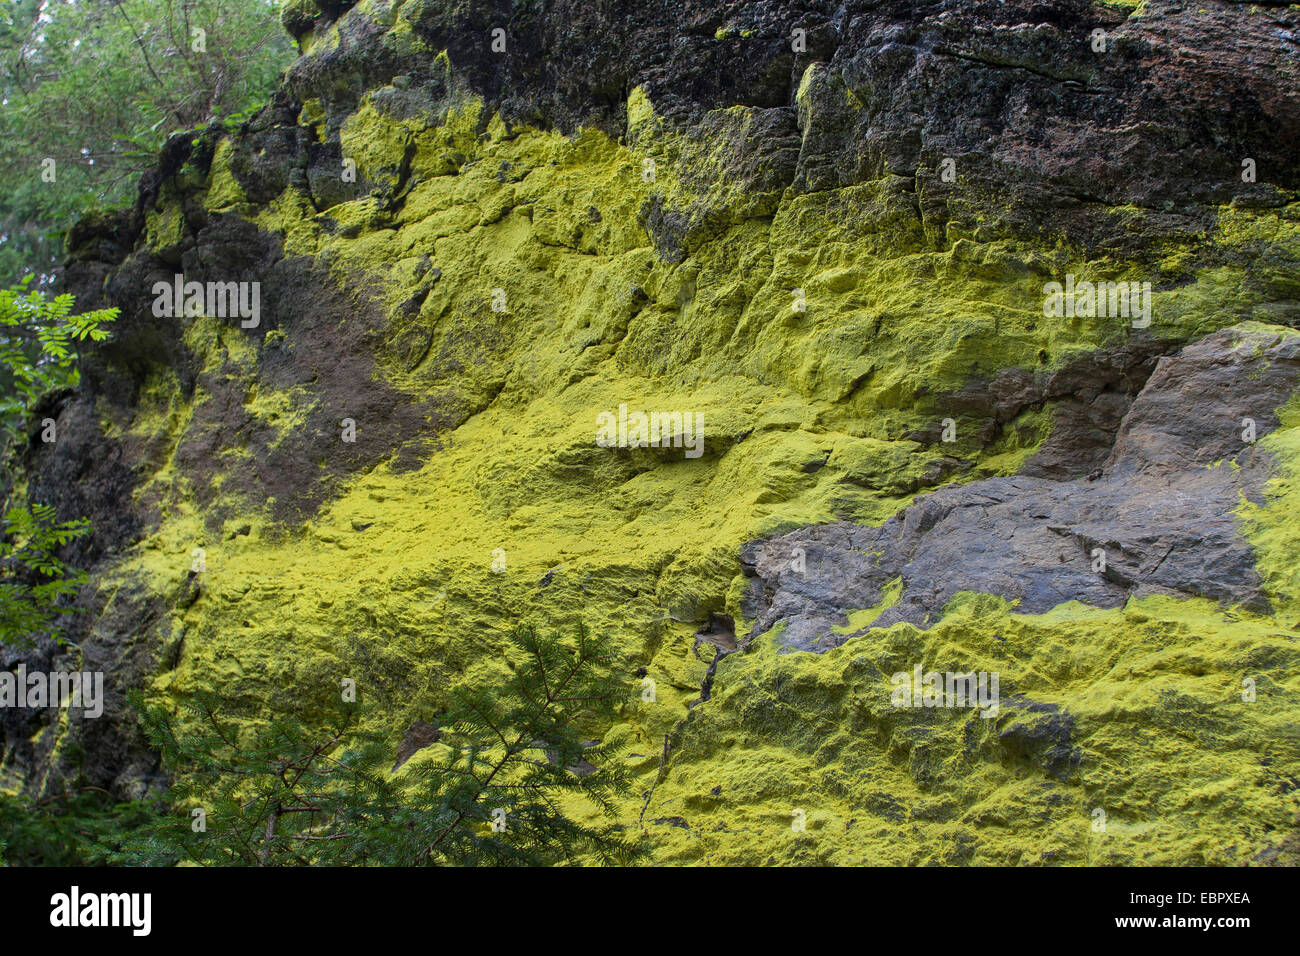 Sulfur dust lichen (Chrysothrix chlorina, Lepraria chlorina), on a rock, Germany Stock Photo